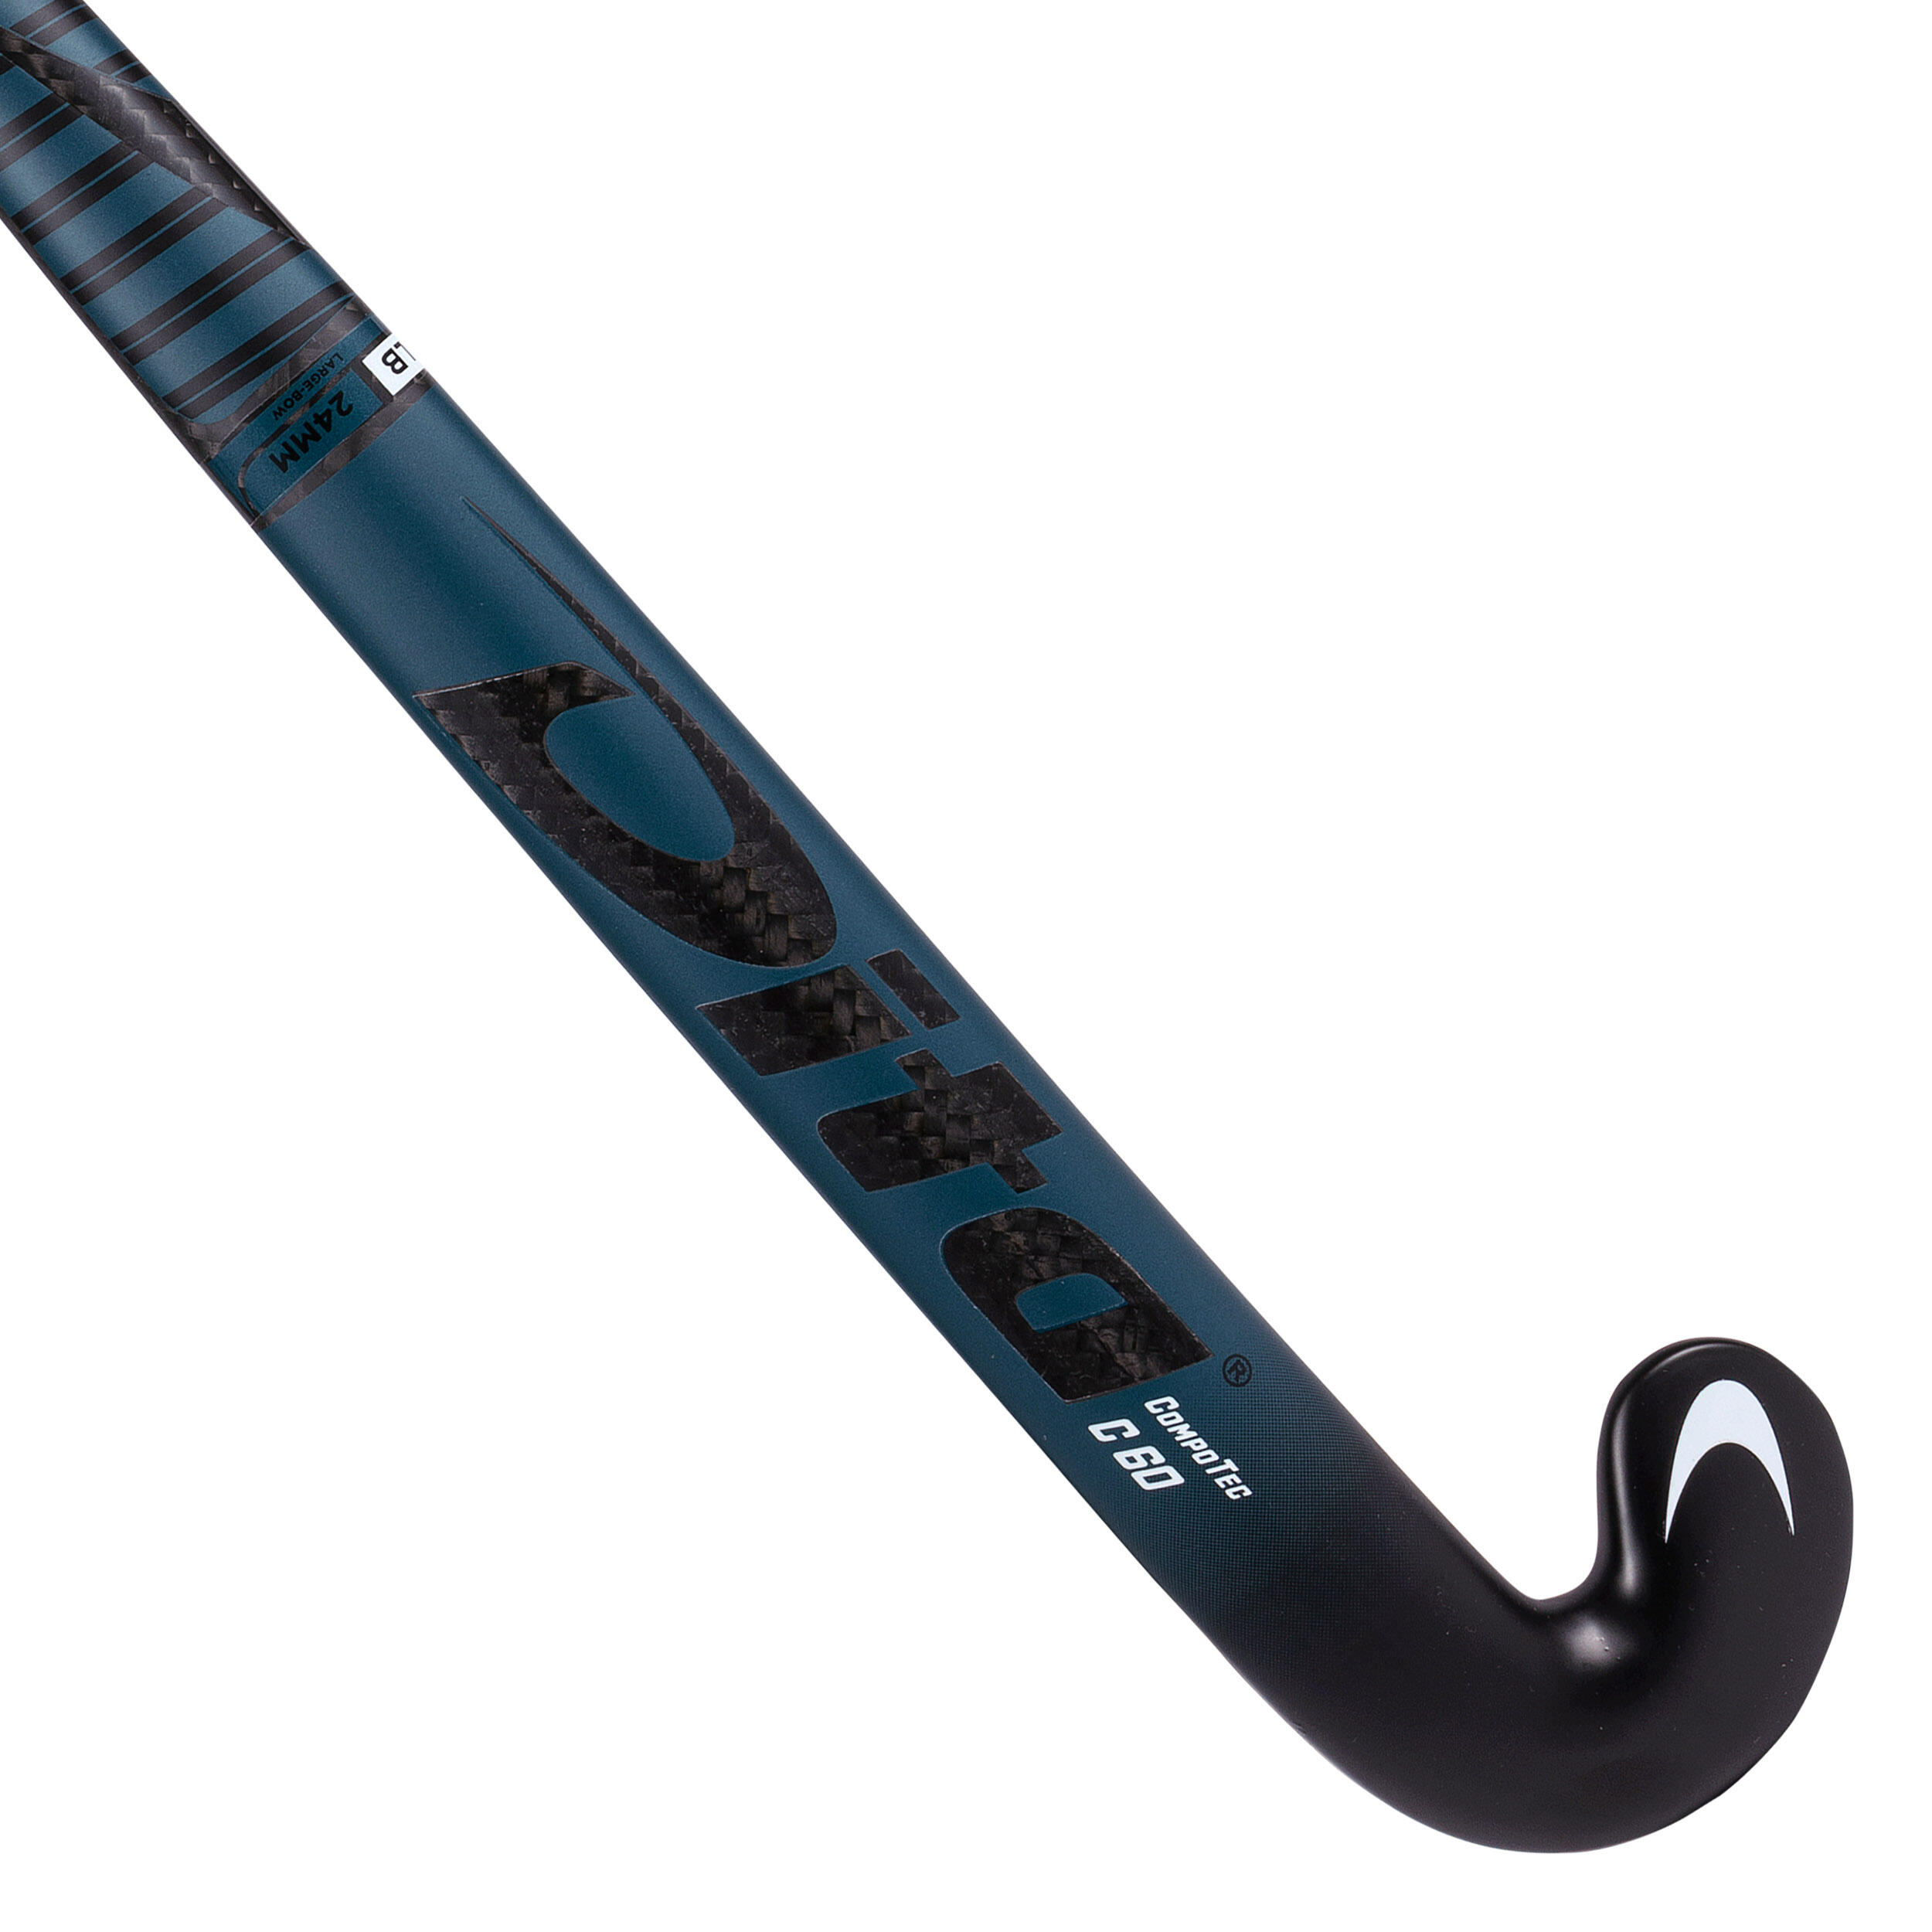 Damen/Herren Feldhockeyschläger Fortgeschrittene Low Bow 60 % Carbon - CompotecC60 dunkeltürkis